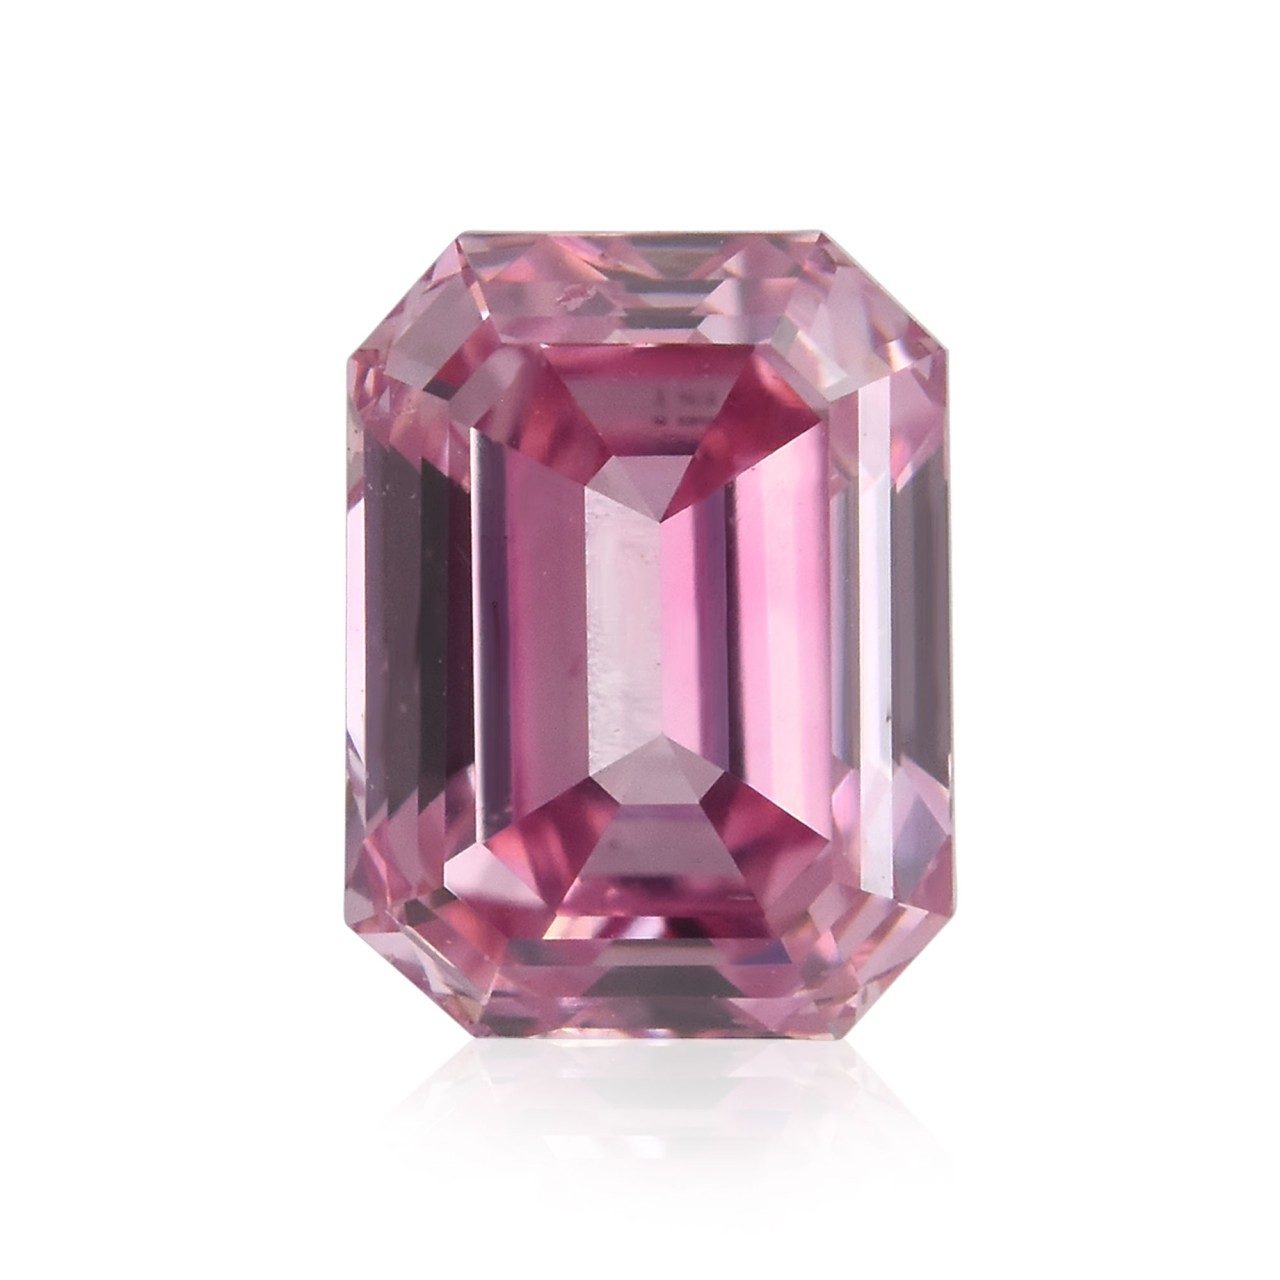 0.37 carat, Fancy Intense Purple Pink Diamond, Emerald Shape, SI1